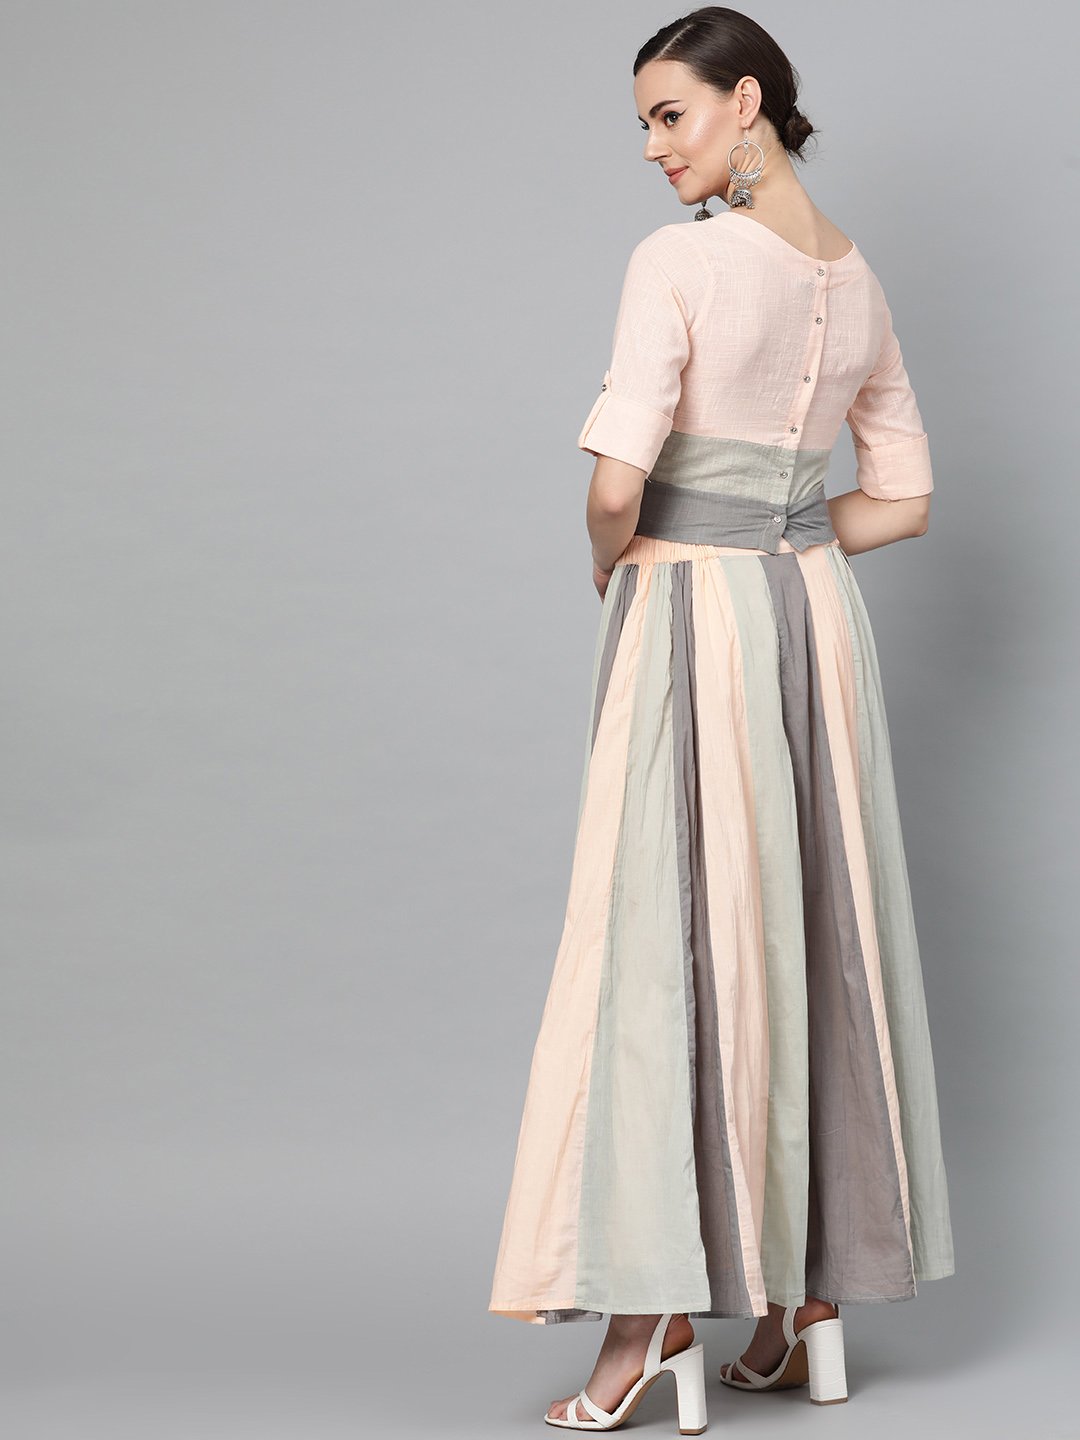 Ishin Women's Cotton Peach & Grey Solid A-Line Top Skirt Set